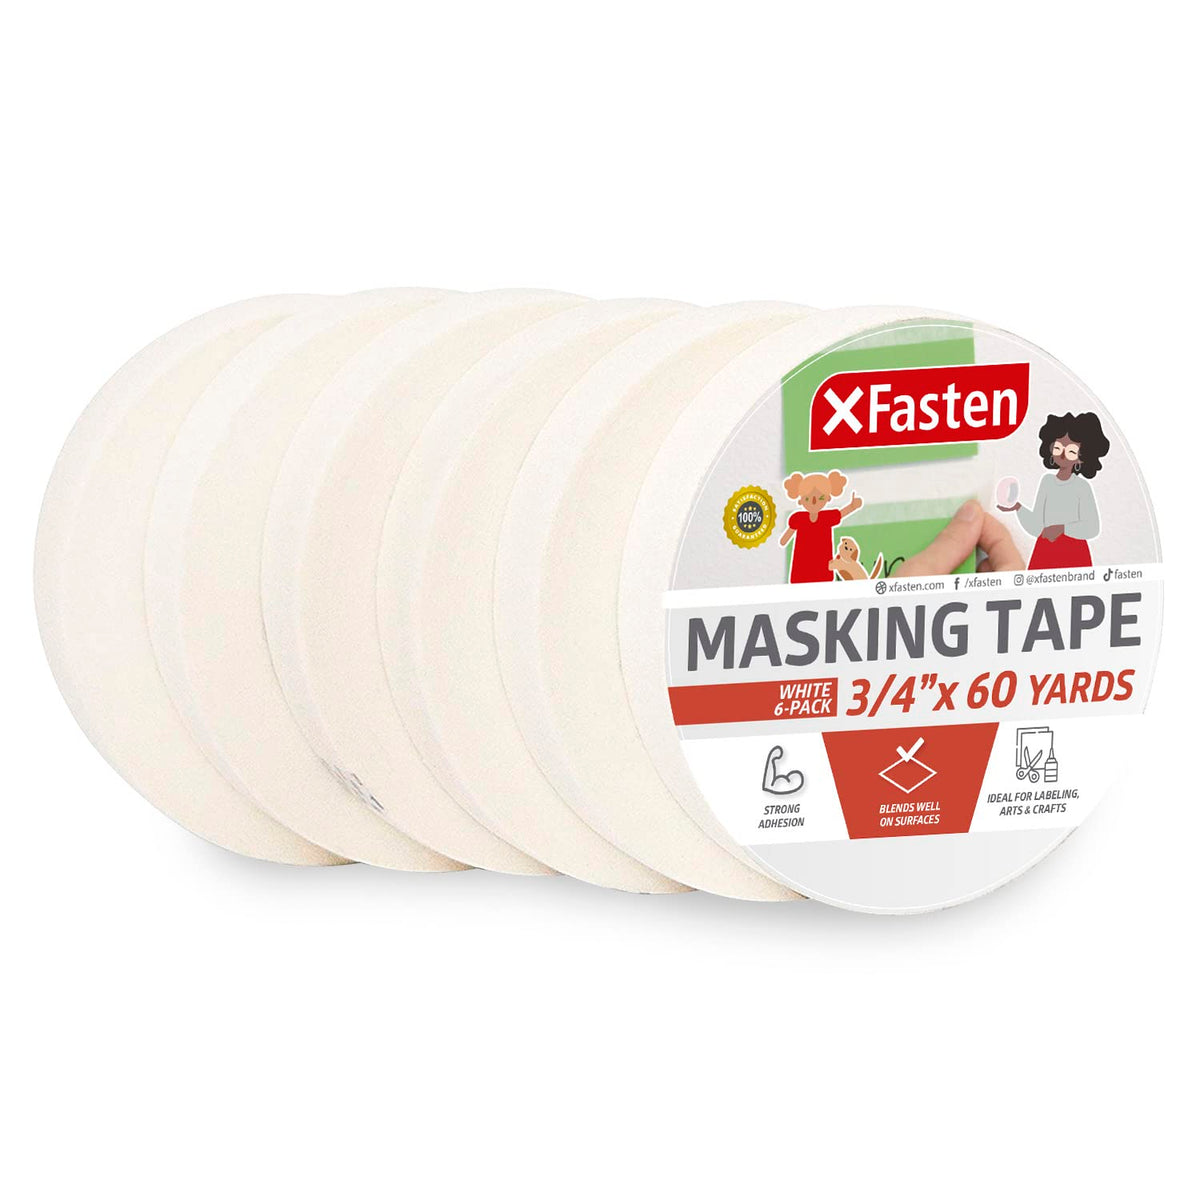 XFasten Professional White Masking Tape 3/4 Inches x 60 Yards 6-Pa